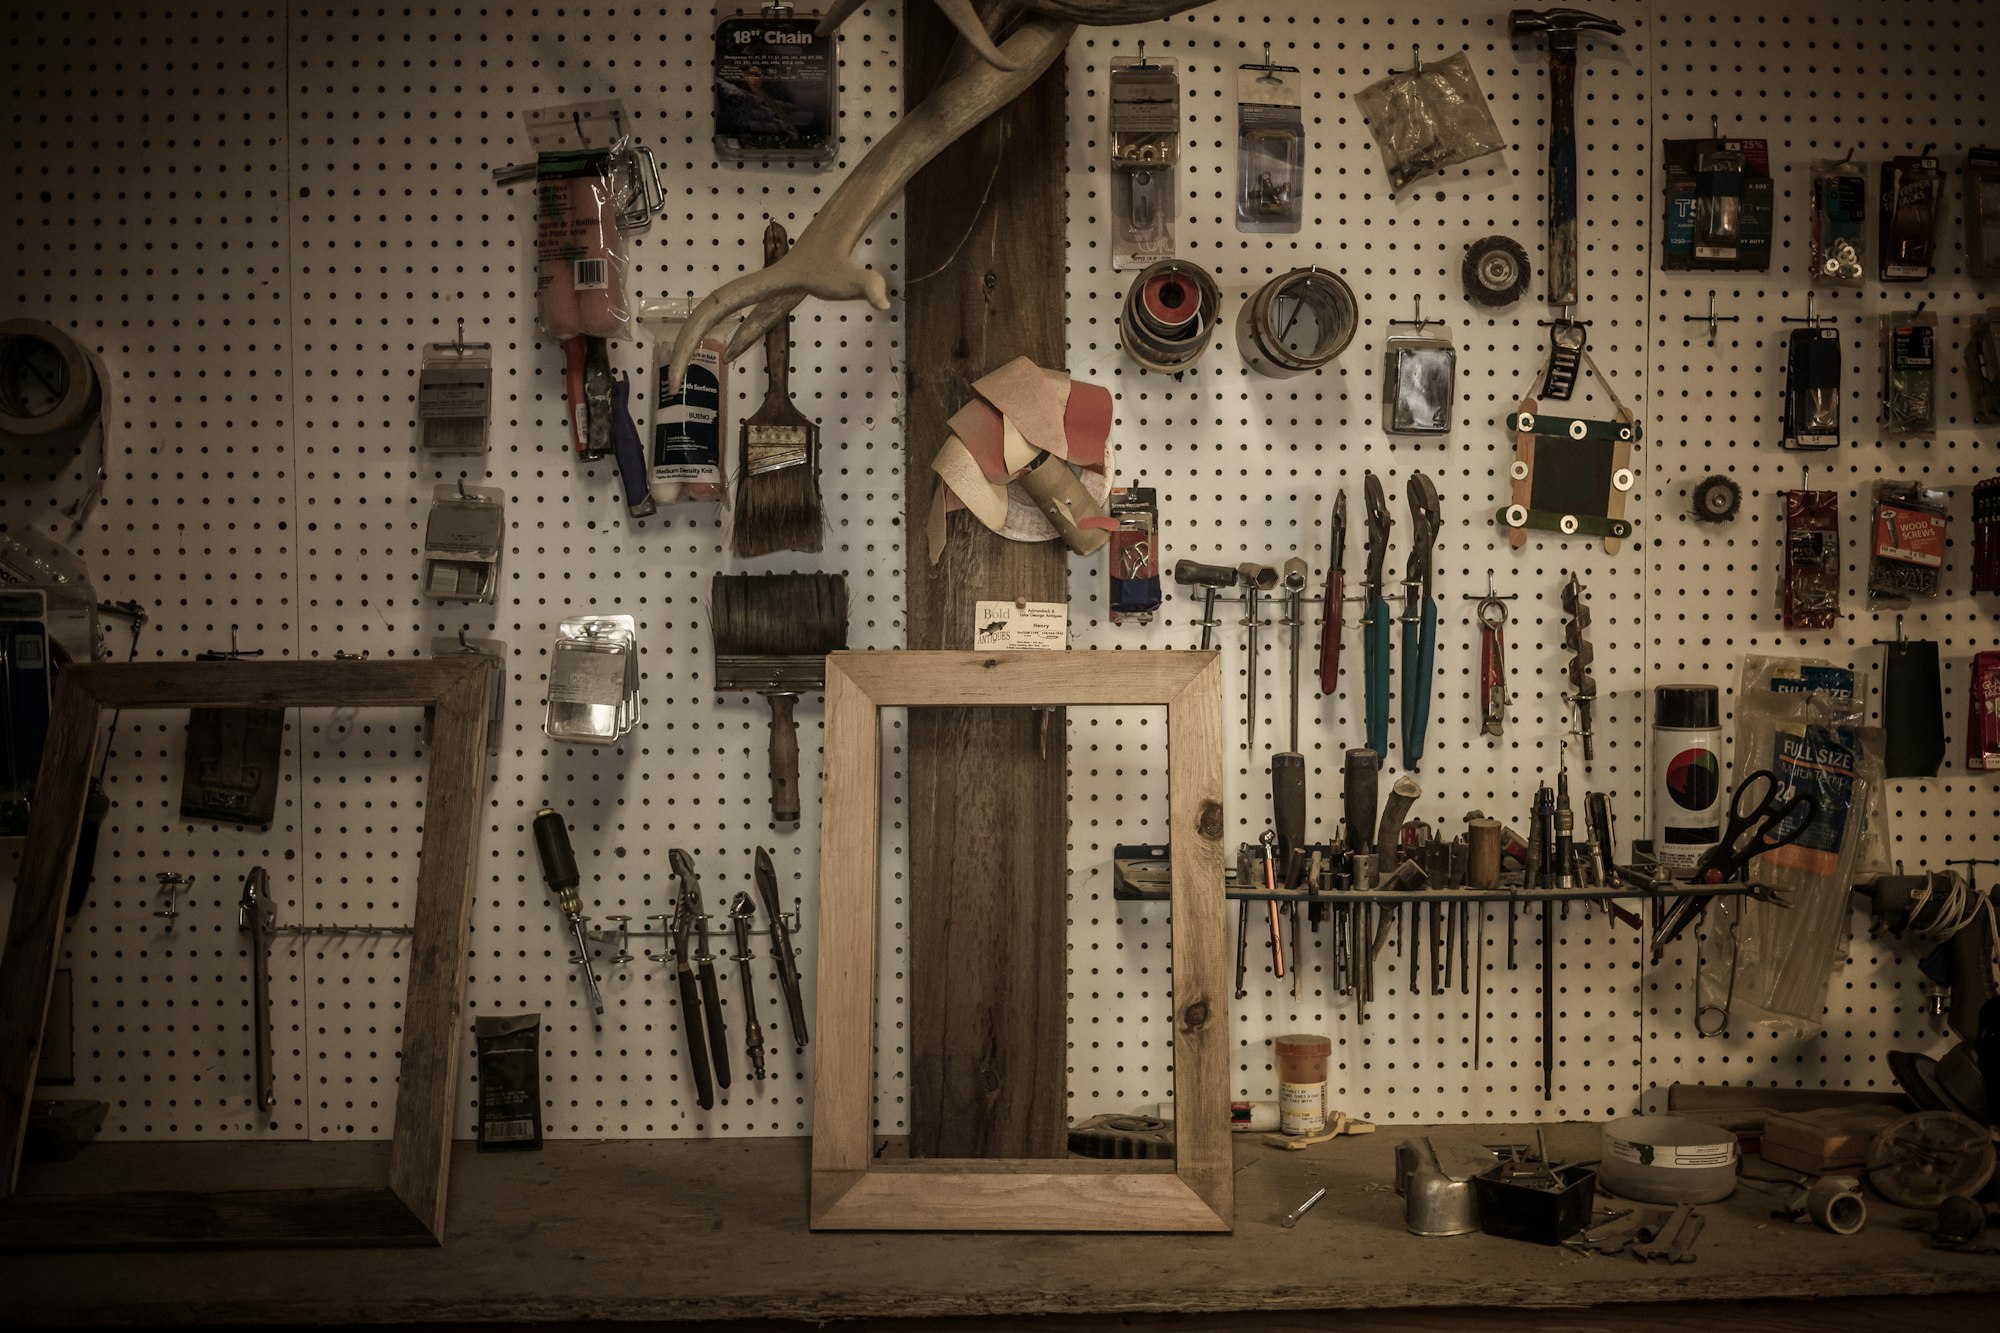 Tools hanging in artist's workshop